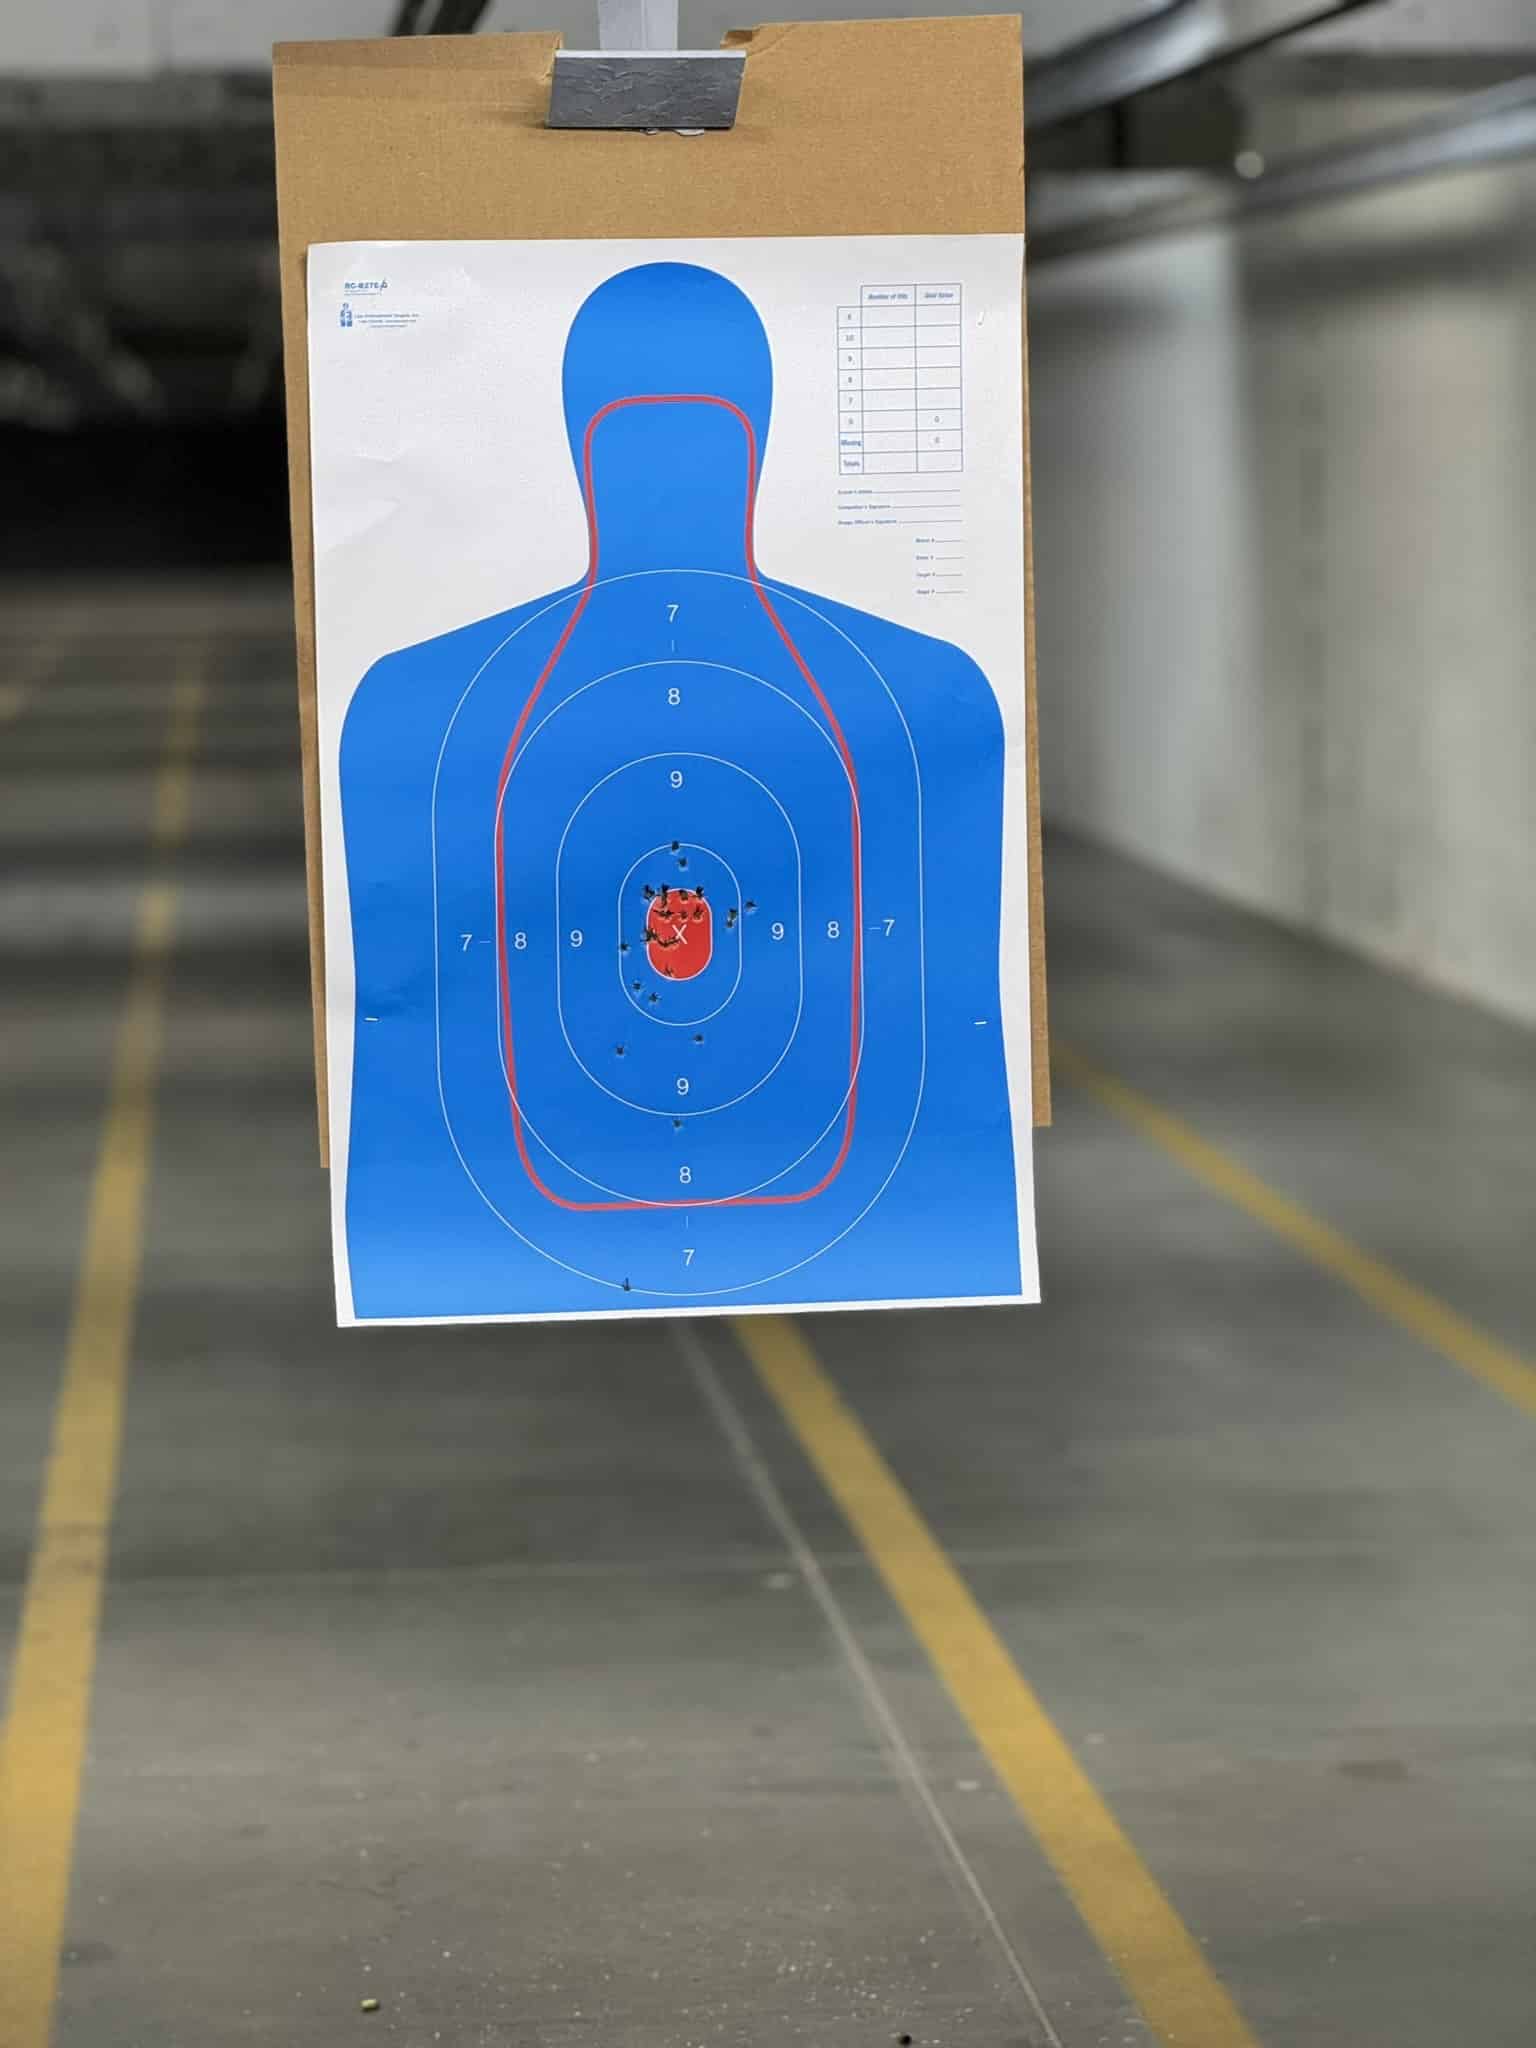 Target at the indoor gun range